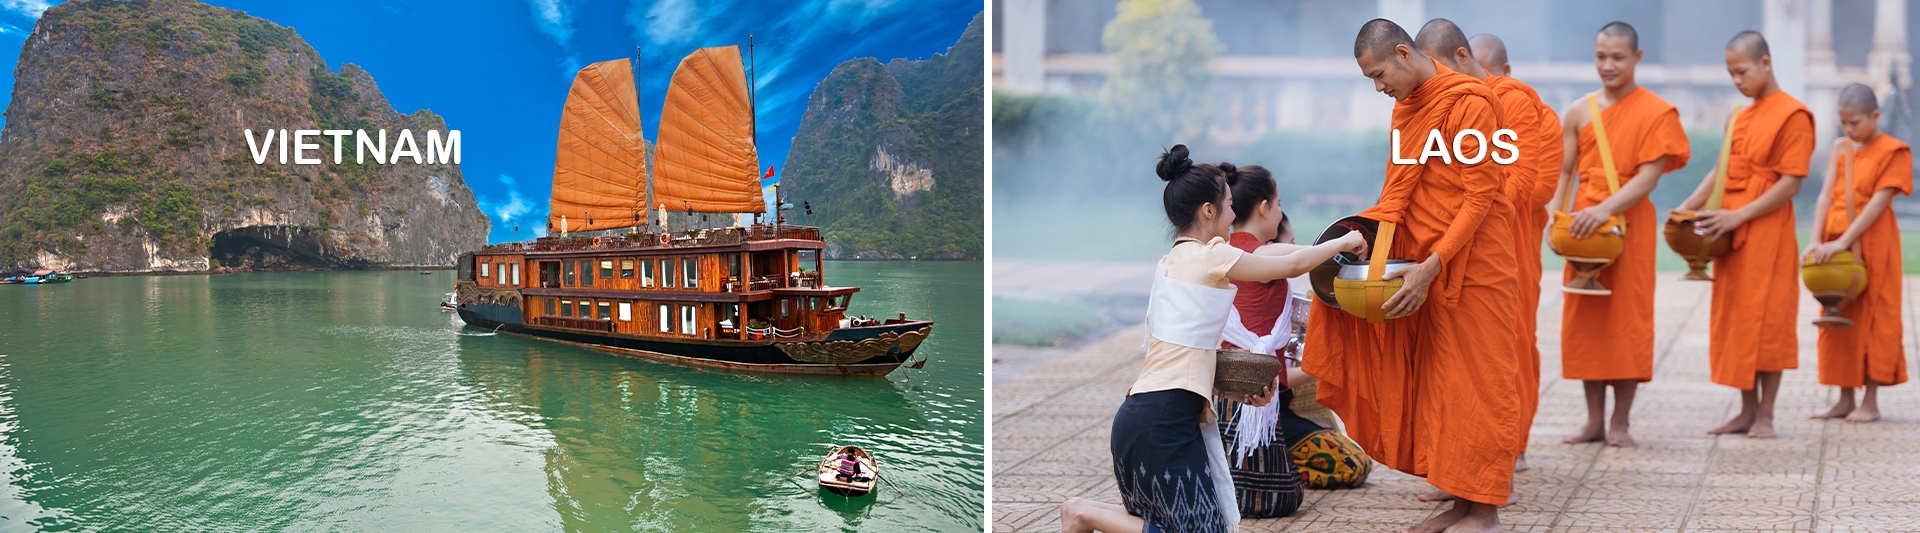 Vietnam and Laos Tours